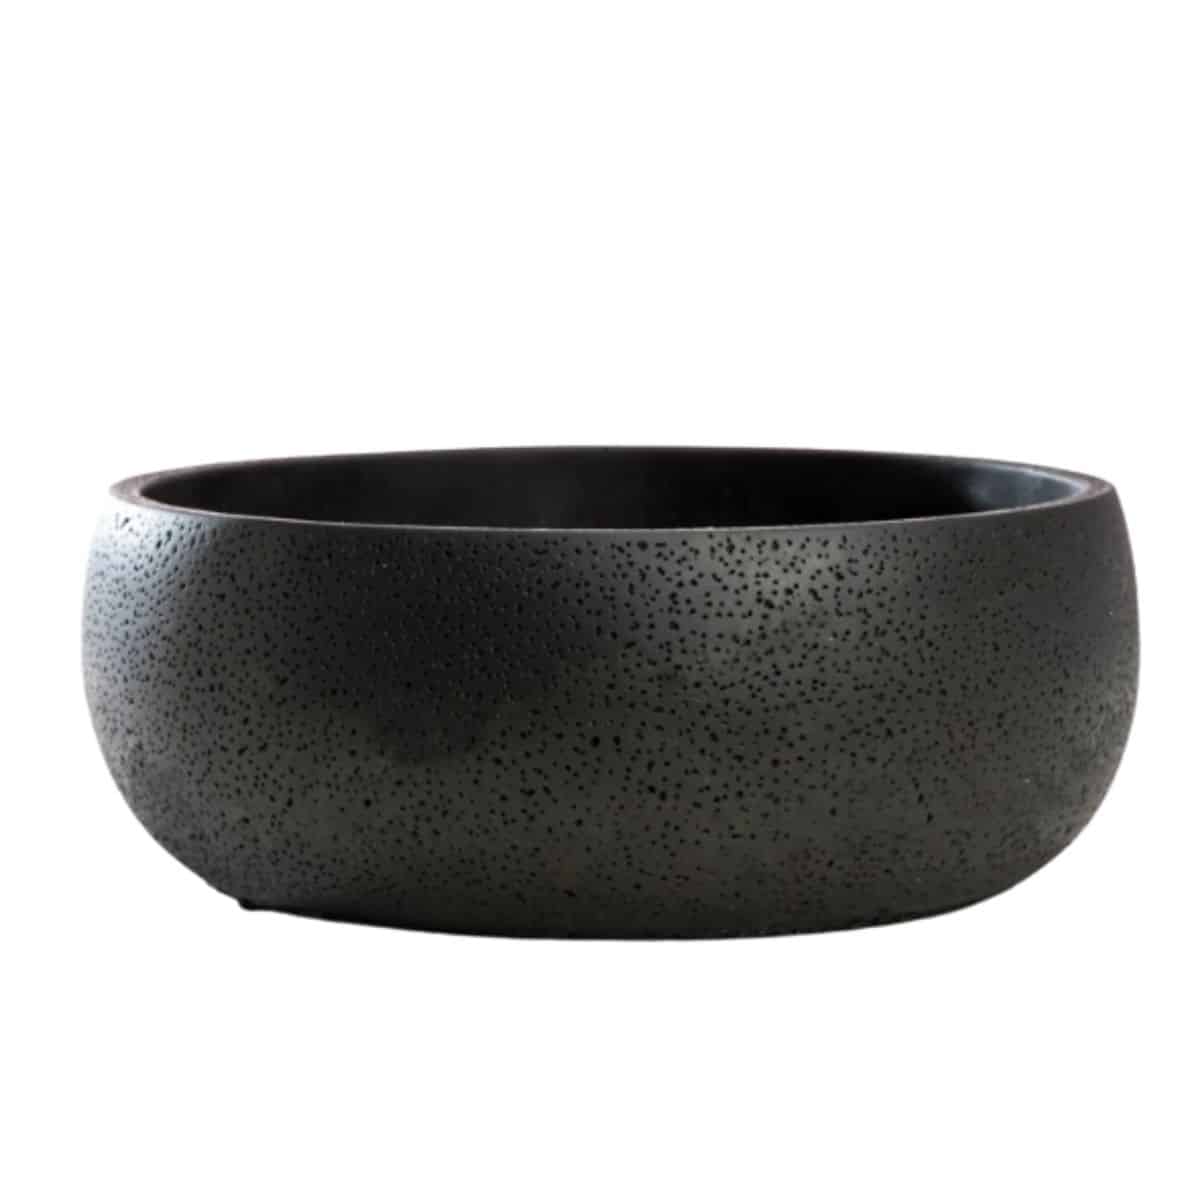 black minimalist design shallow cactus bowl with drainage hole from etsy